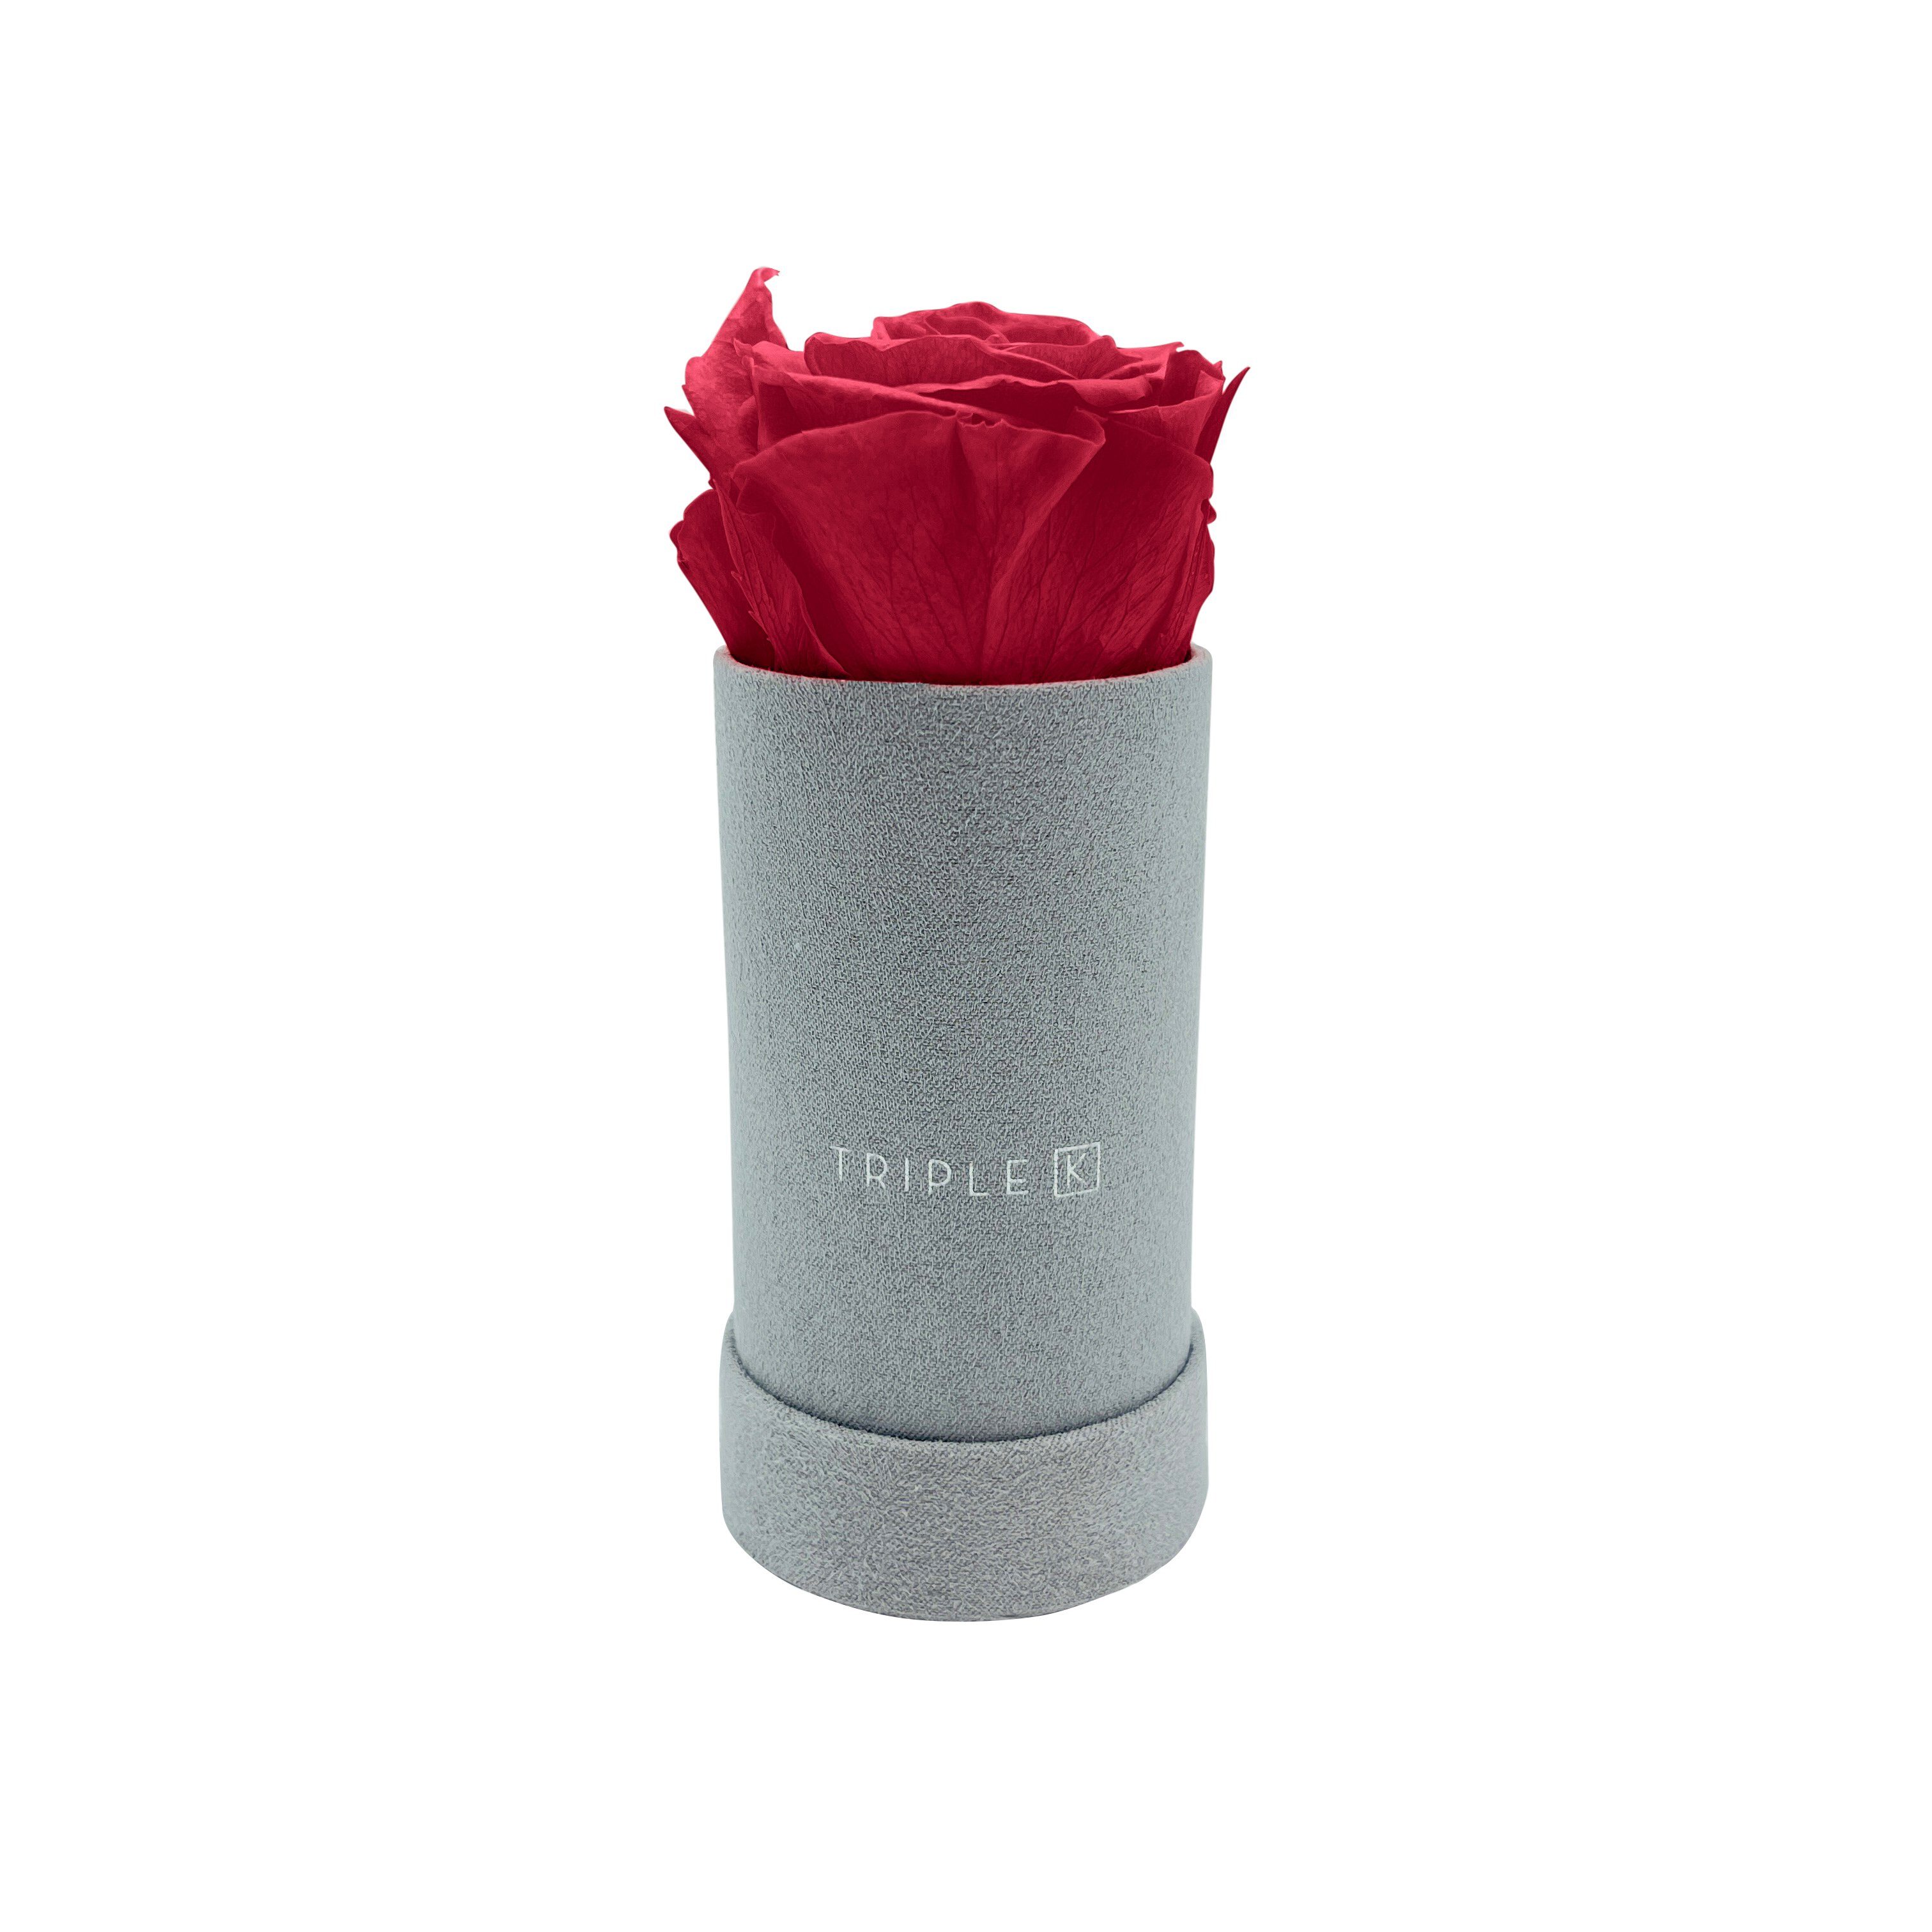 Jahre konservierten Rosenbox TRIPLE Kunstblume mit Grußkarte K Infinity K - Flowerbox mit bis Haltbar, TRIPLE Velvet Infinity Rot Rosen, Inkl. 3 Rose, Blumenbox Rosen,